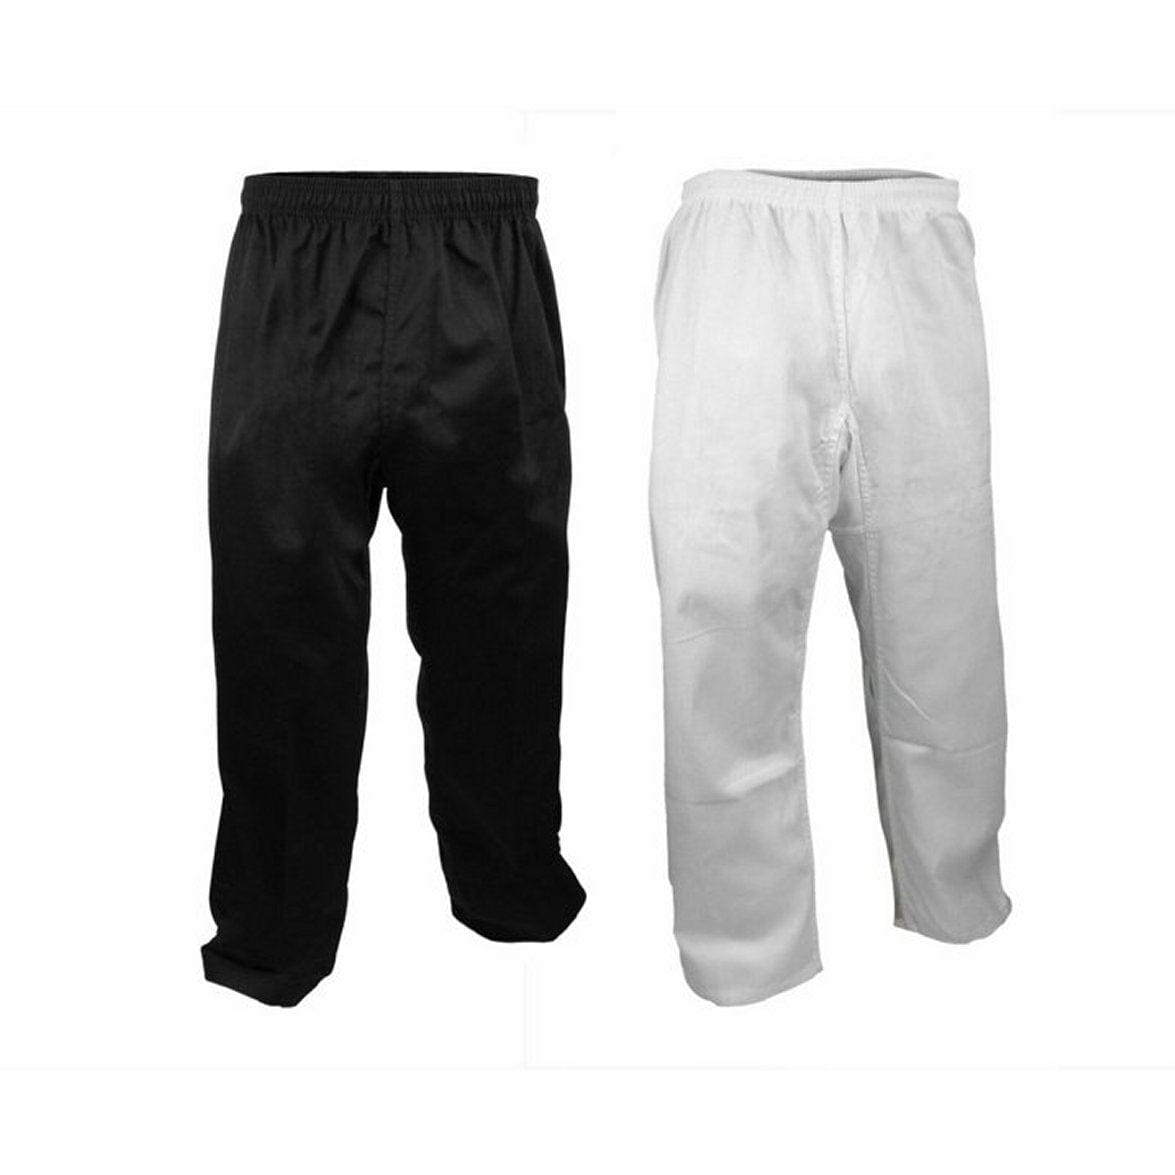 EclipseMartialArtsSupplies sporting goods ProForce Gladiator 6 oz Karate Pants  55/45 Blend black or white